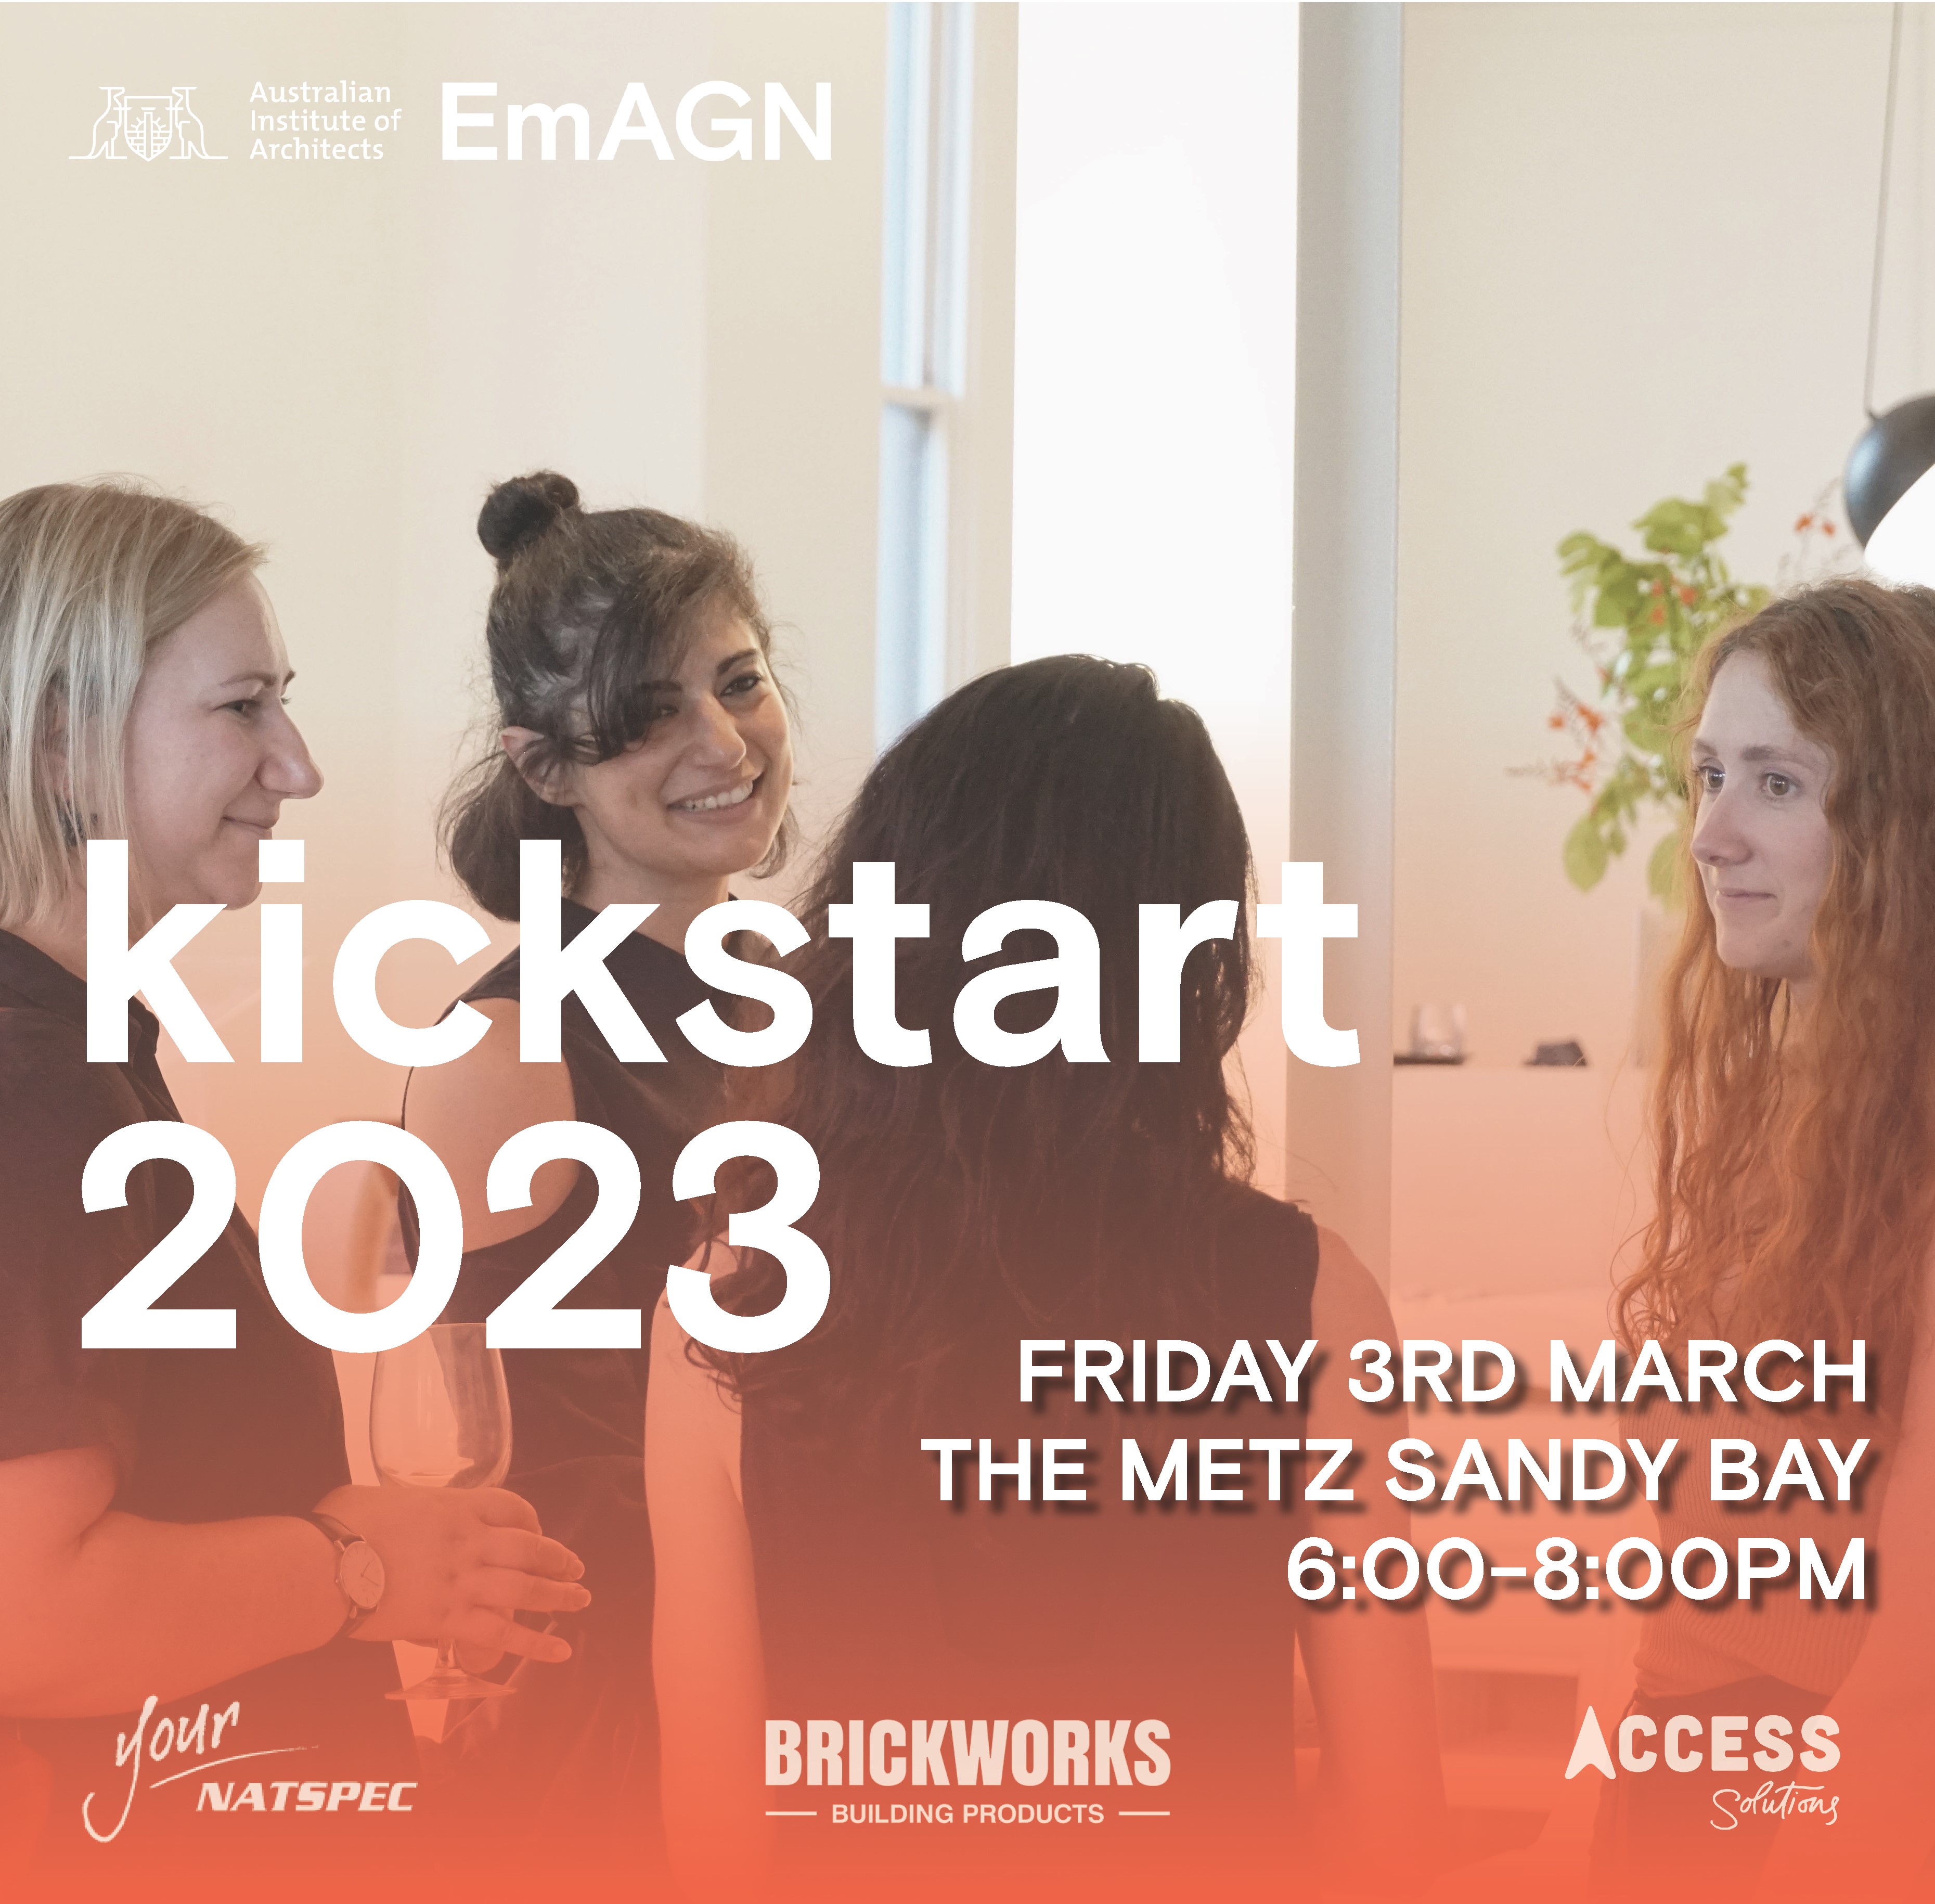 EmAGN TAS Kickstart Event 2023